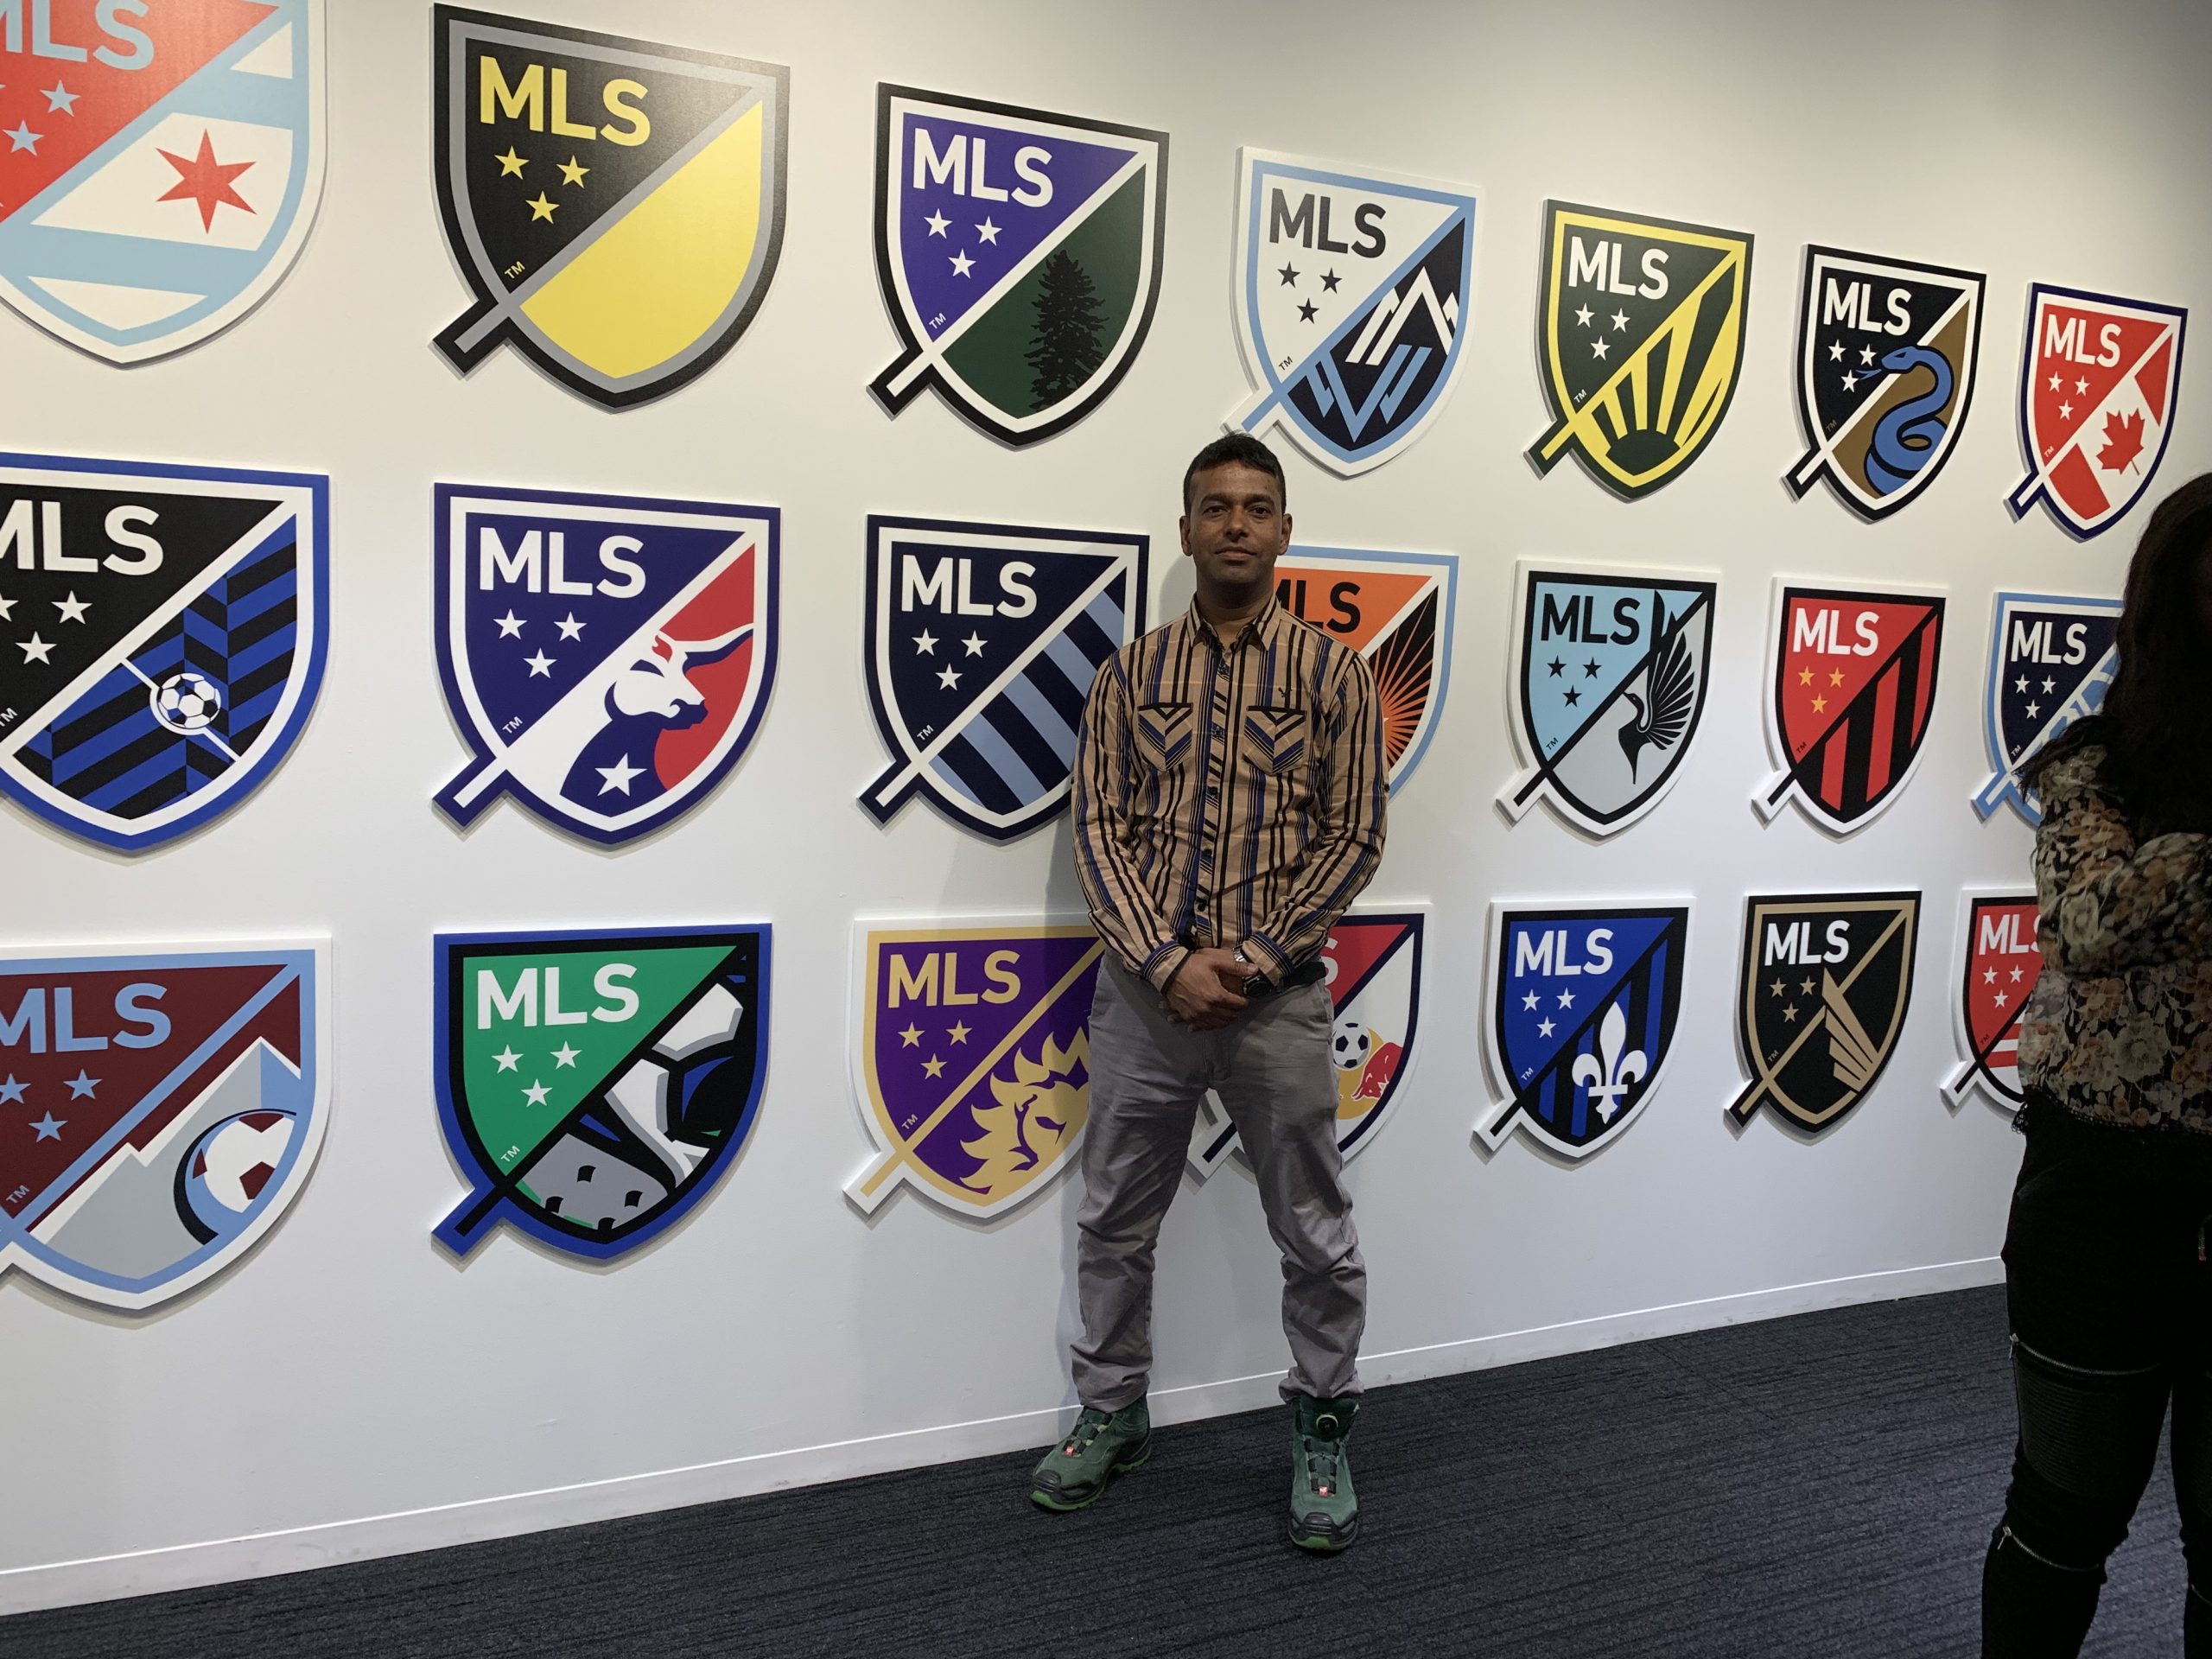 KT standing infront of MLS clubs logo (nepal football)